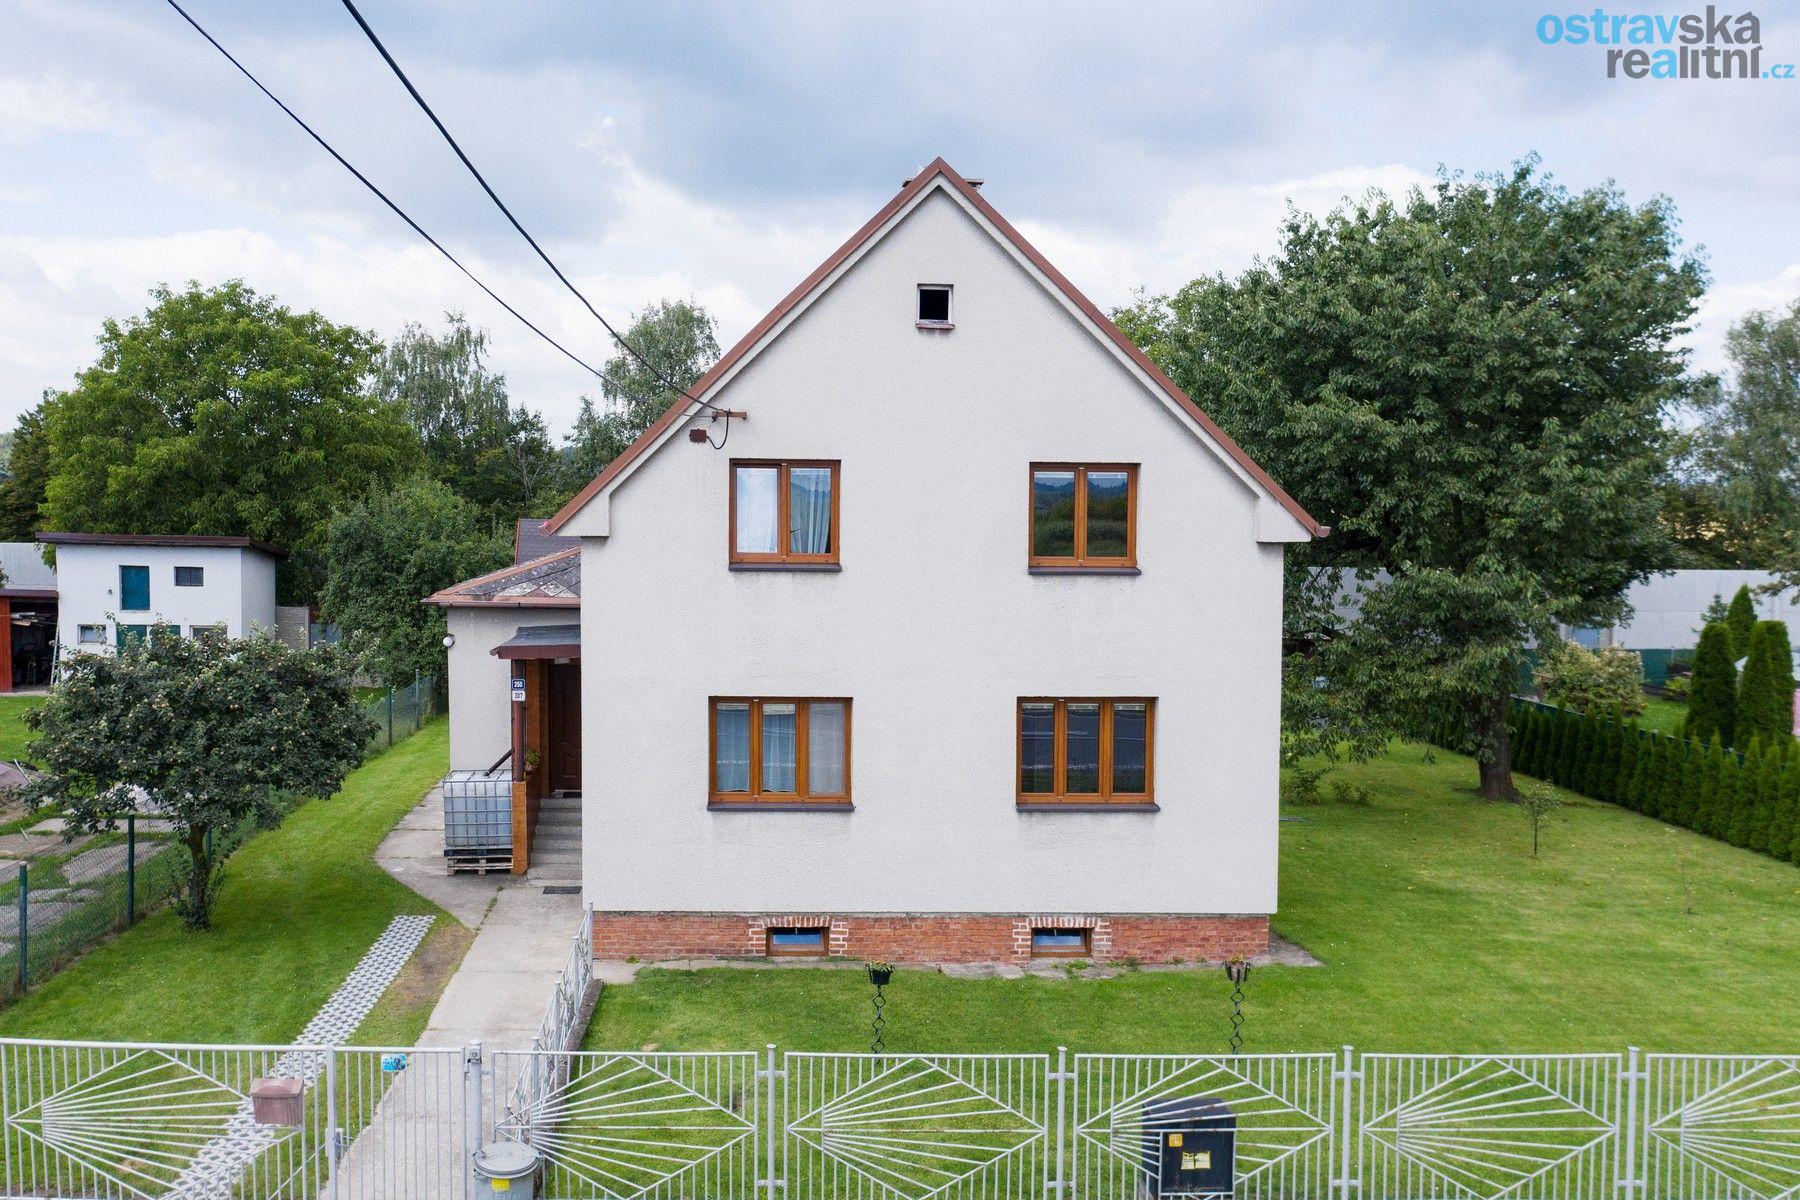 Prodej, rodinný dům 5+1, Ostrava - Nová Bělá, ul. Krmelínská, 160 m2, zahrada 855 m2